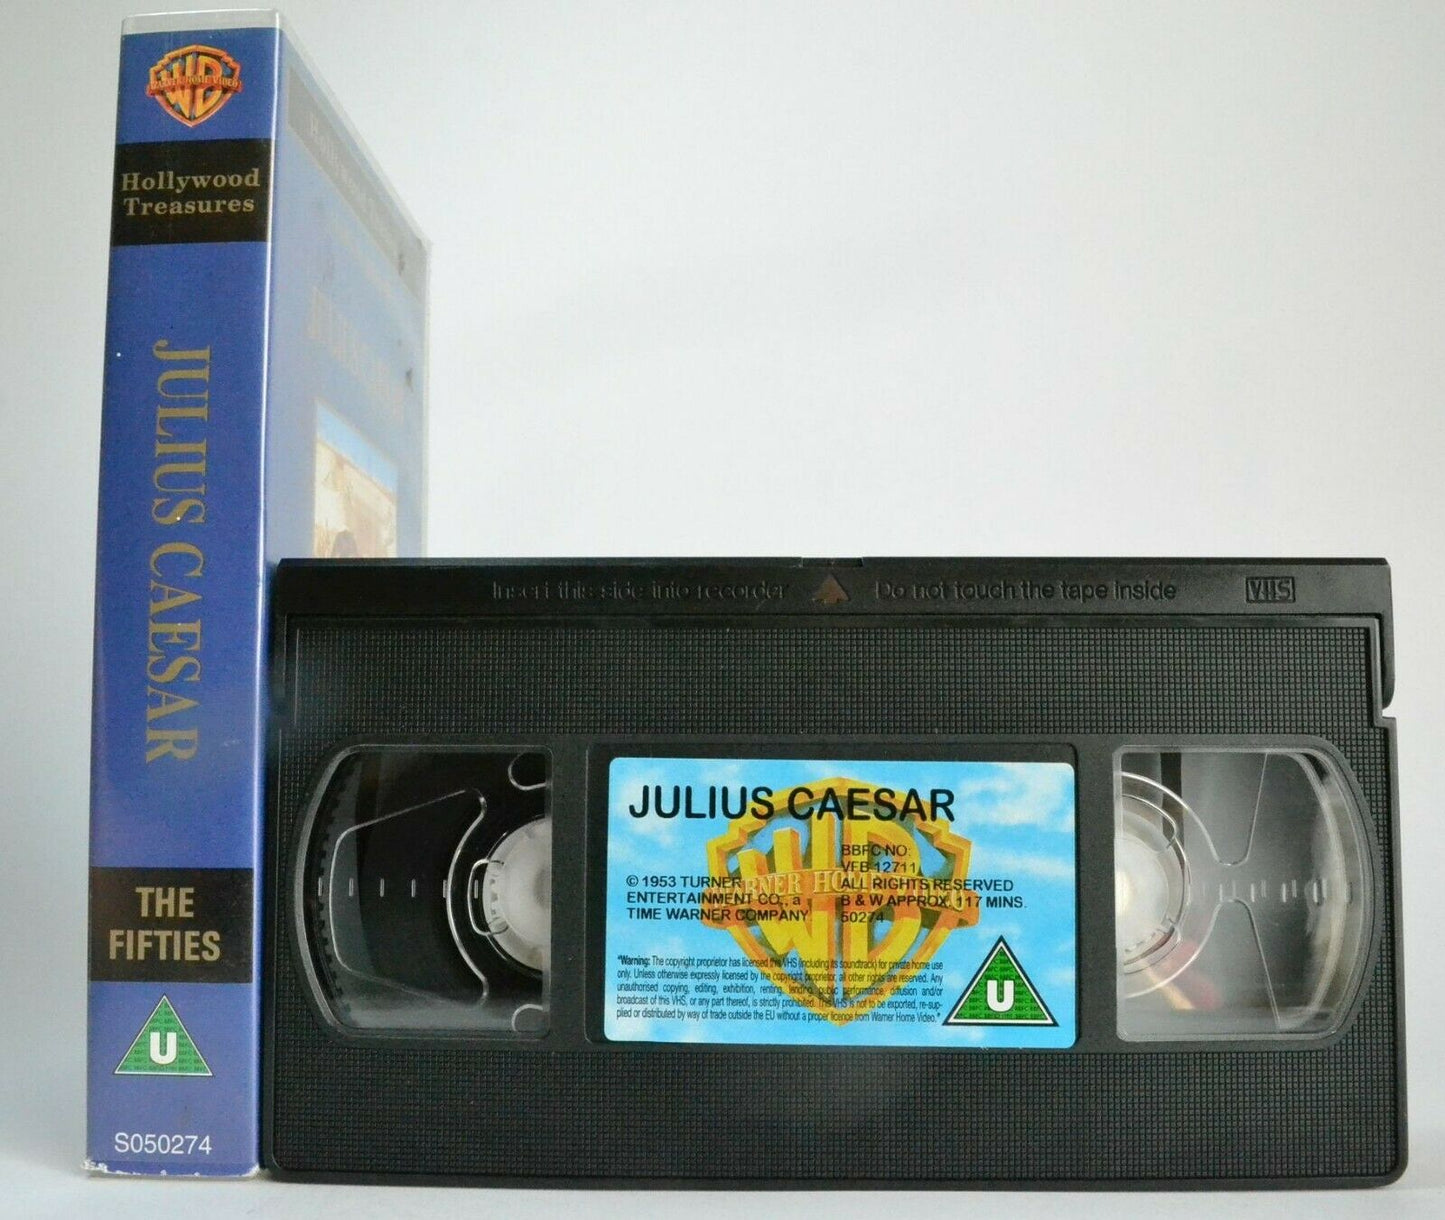 Julius Caesar; [Hollywood Treasures]: Historical Drama - Marlon Brando - Pal VHS-